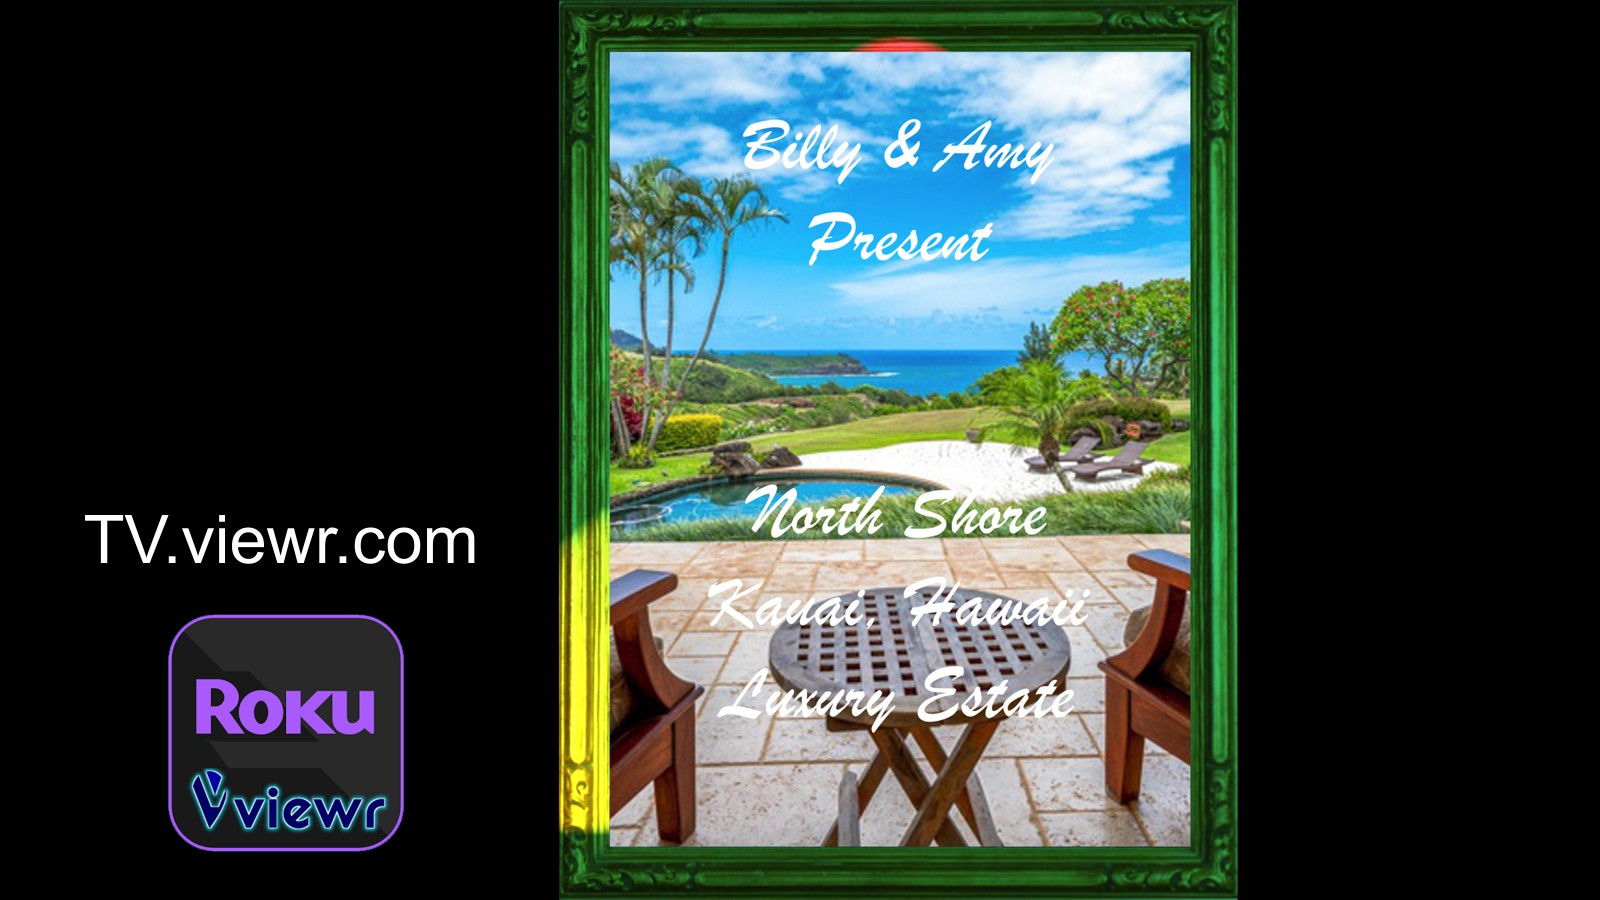 Billy and Amy Present North Shore Kauai Hawaii Luxury Estate viewr TV Slide